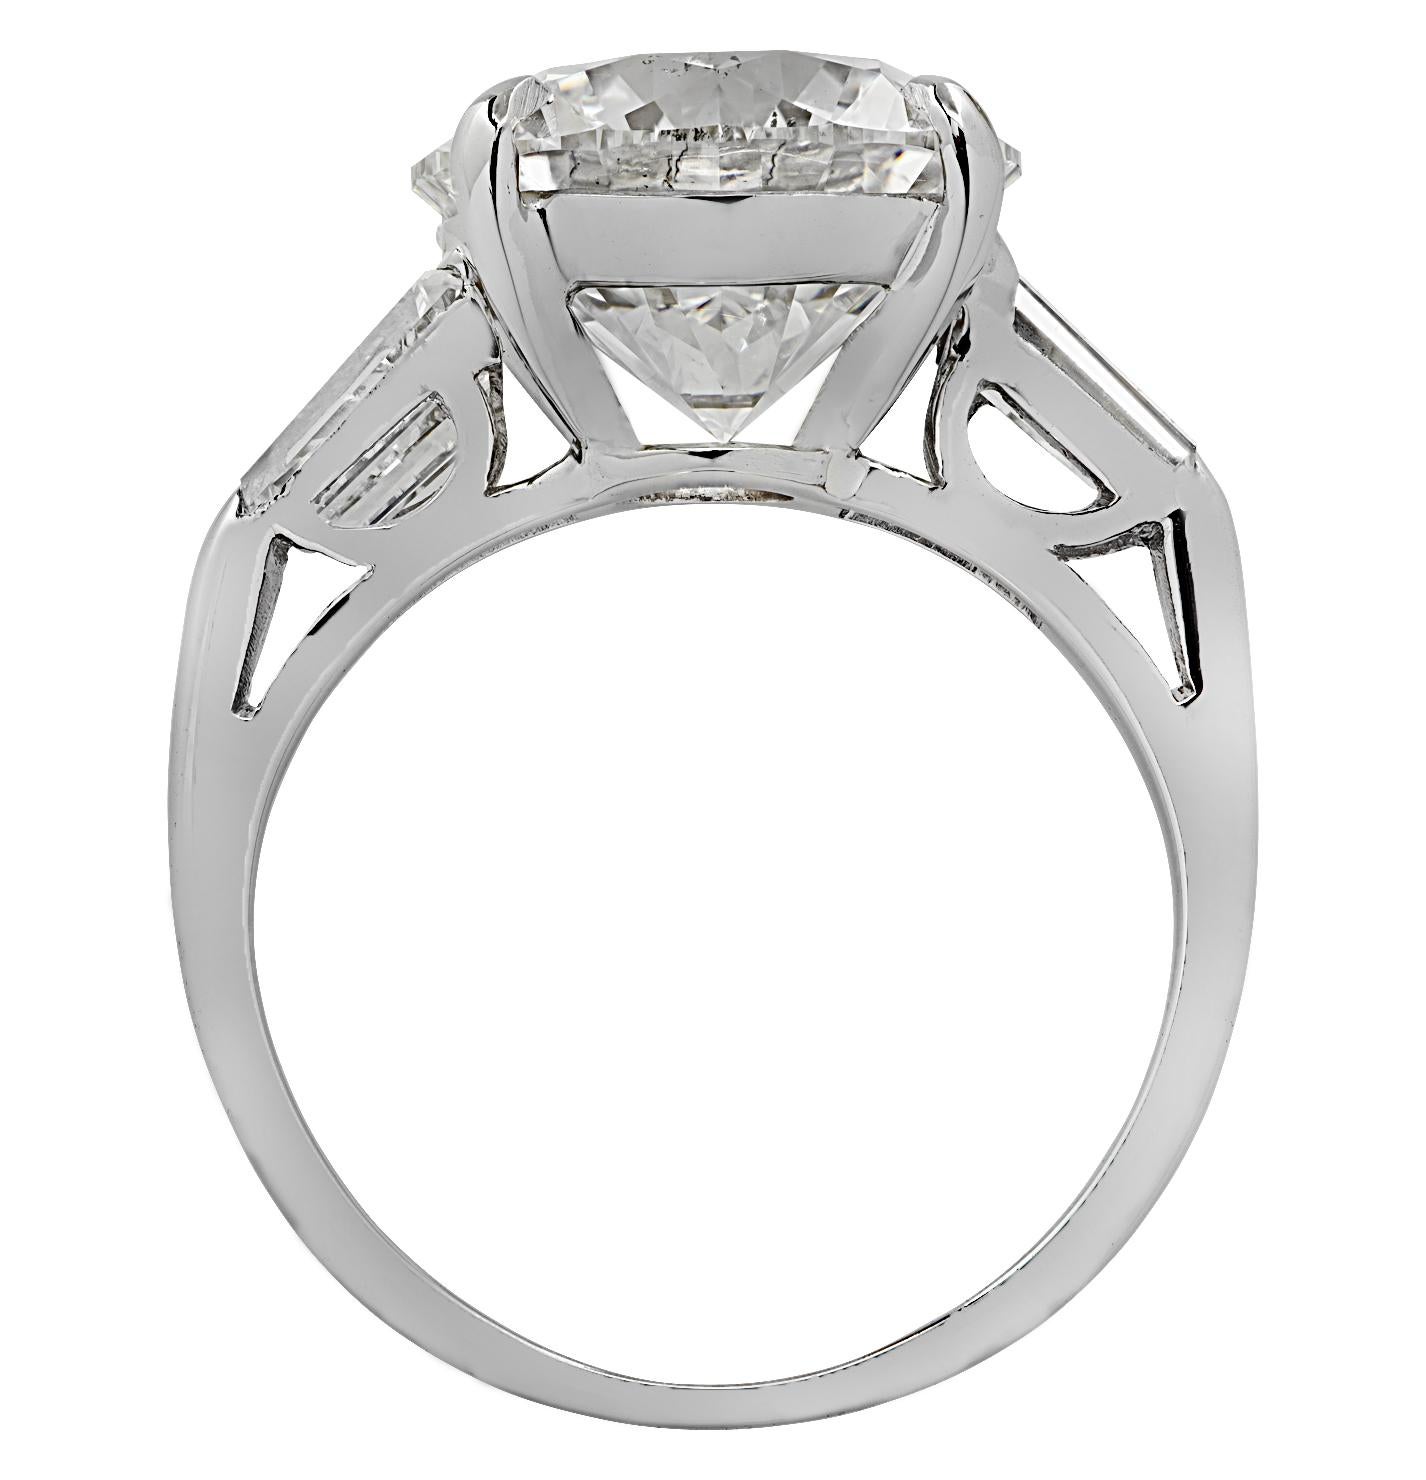 Round Cut Vivid Diamonds GIA Certified 4.54 Carat Diamond Engagement Ring